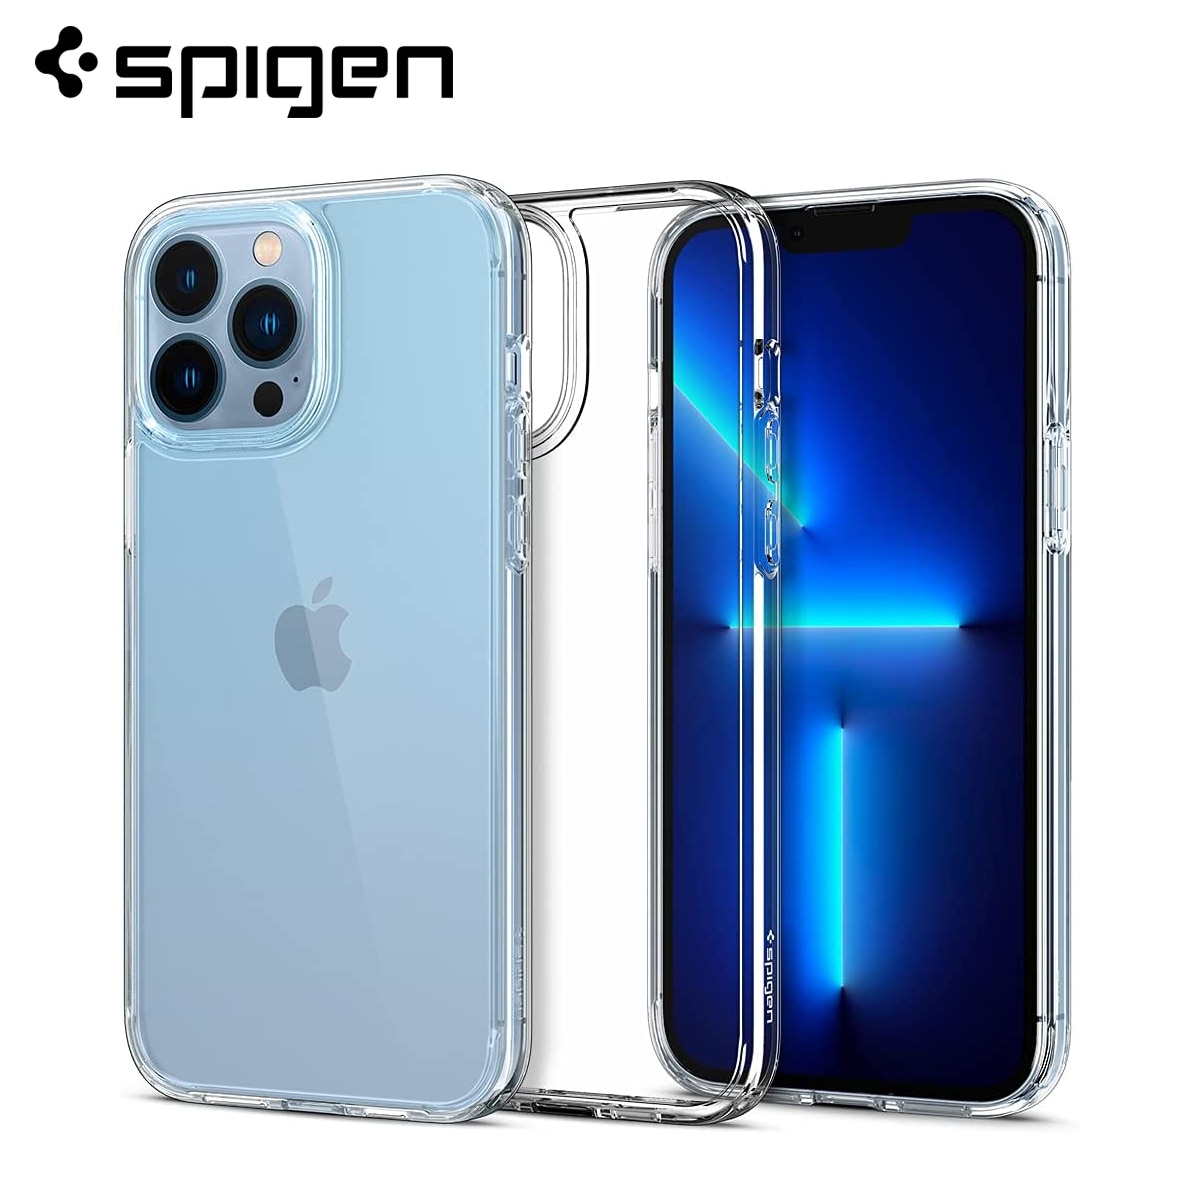 Spigen Ultra Hybrid Case for iPhone 13 Pro Max 6 7